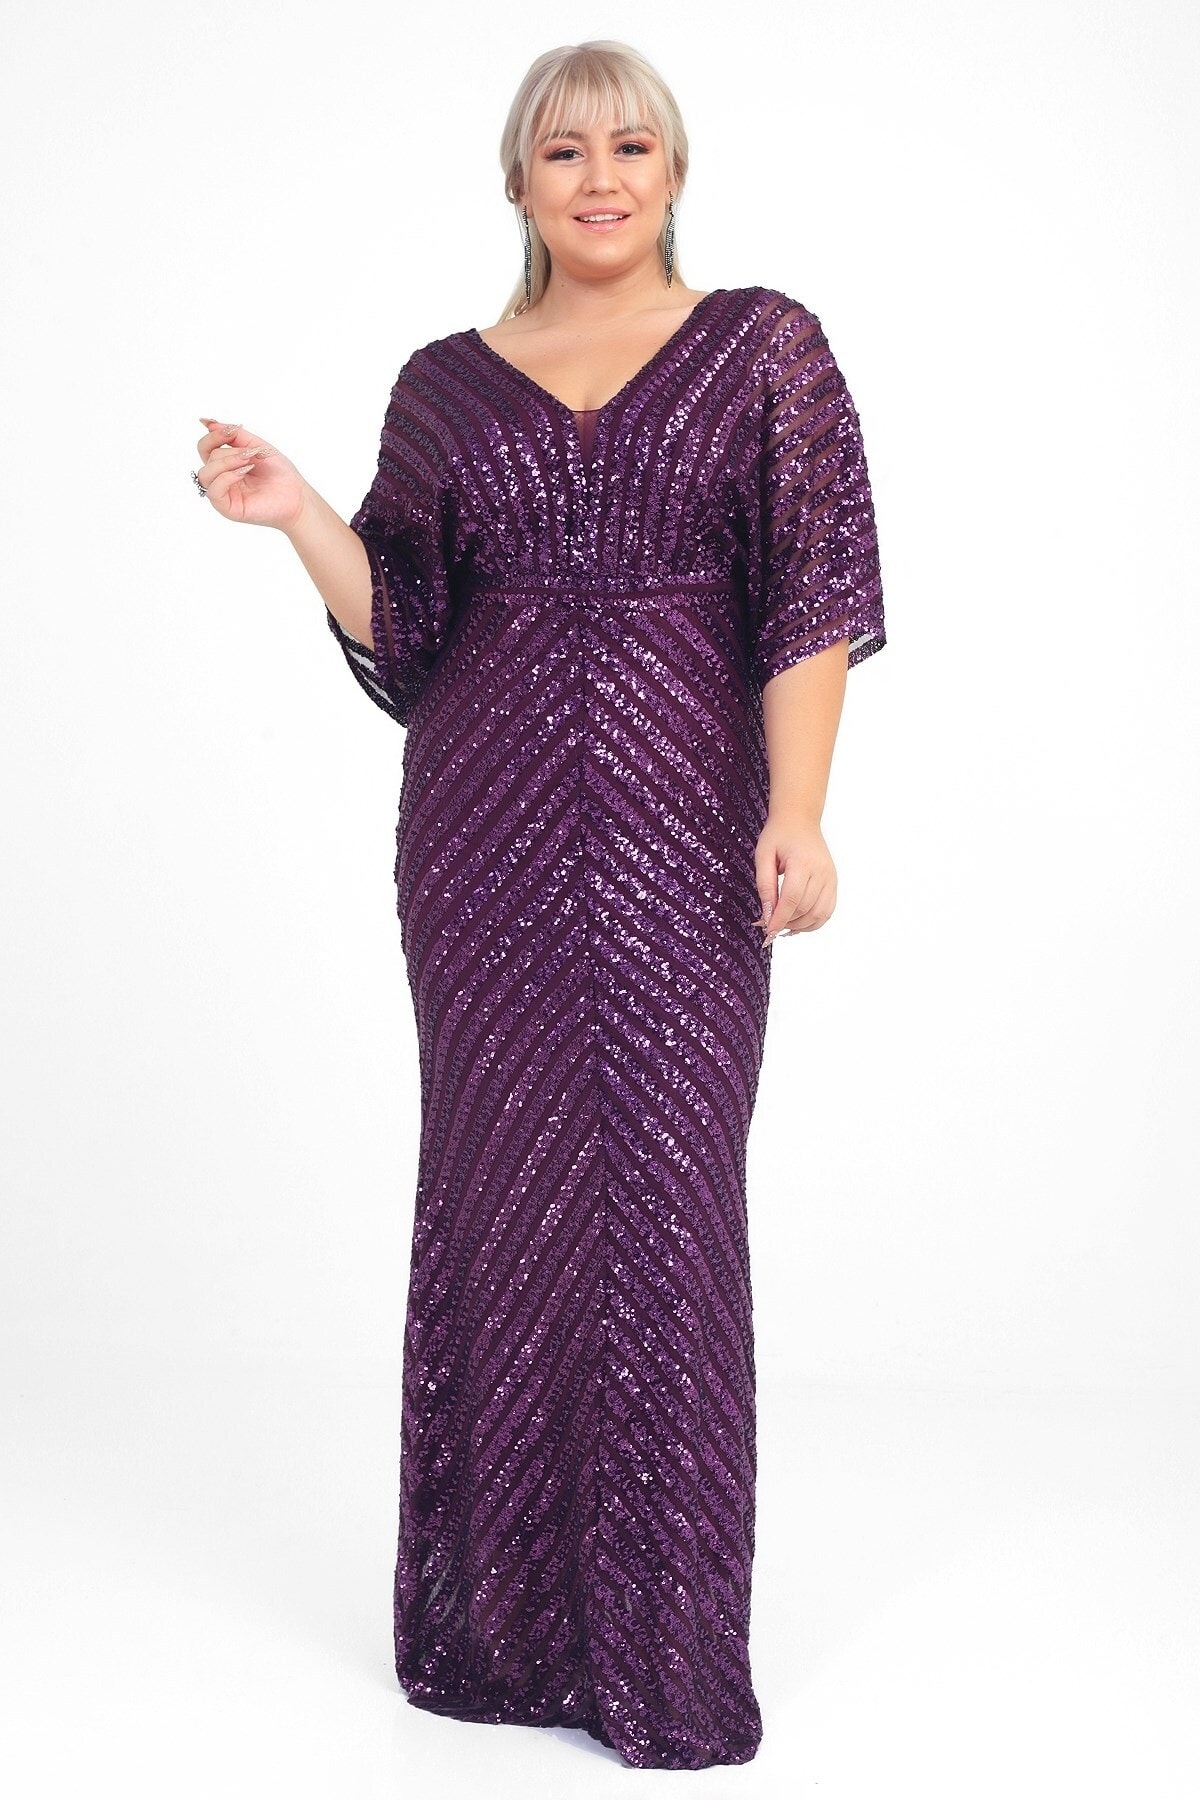 By Saygı Women's Purple Ottoban Pulp Lined B.b Long Evening Dress